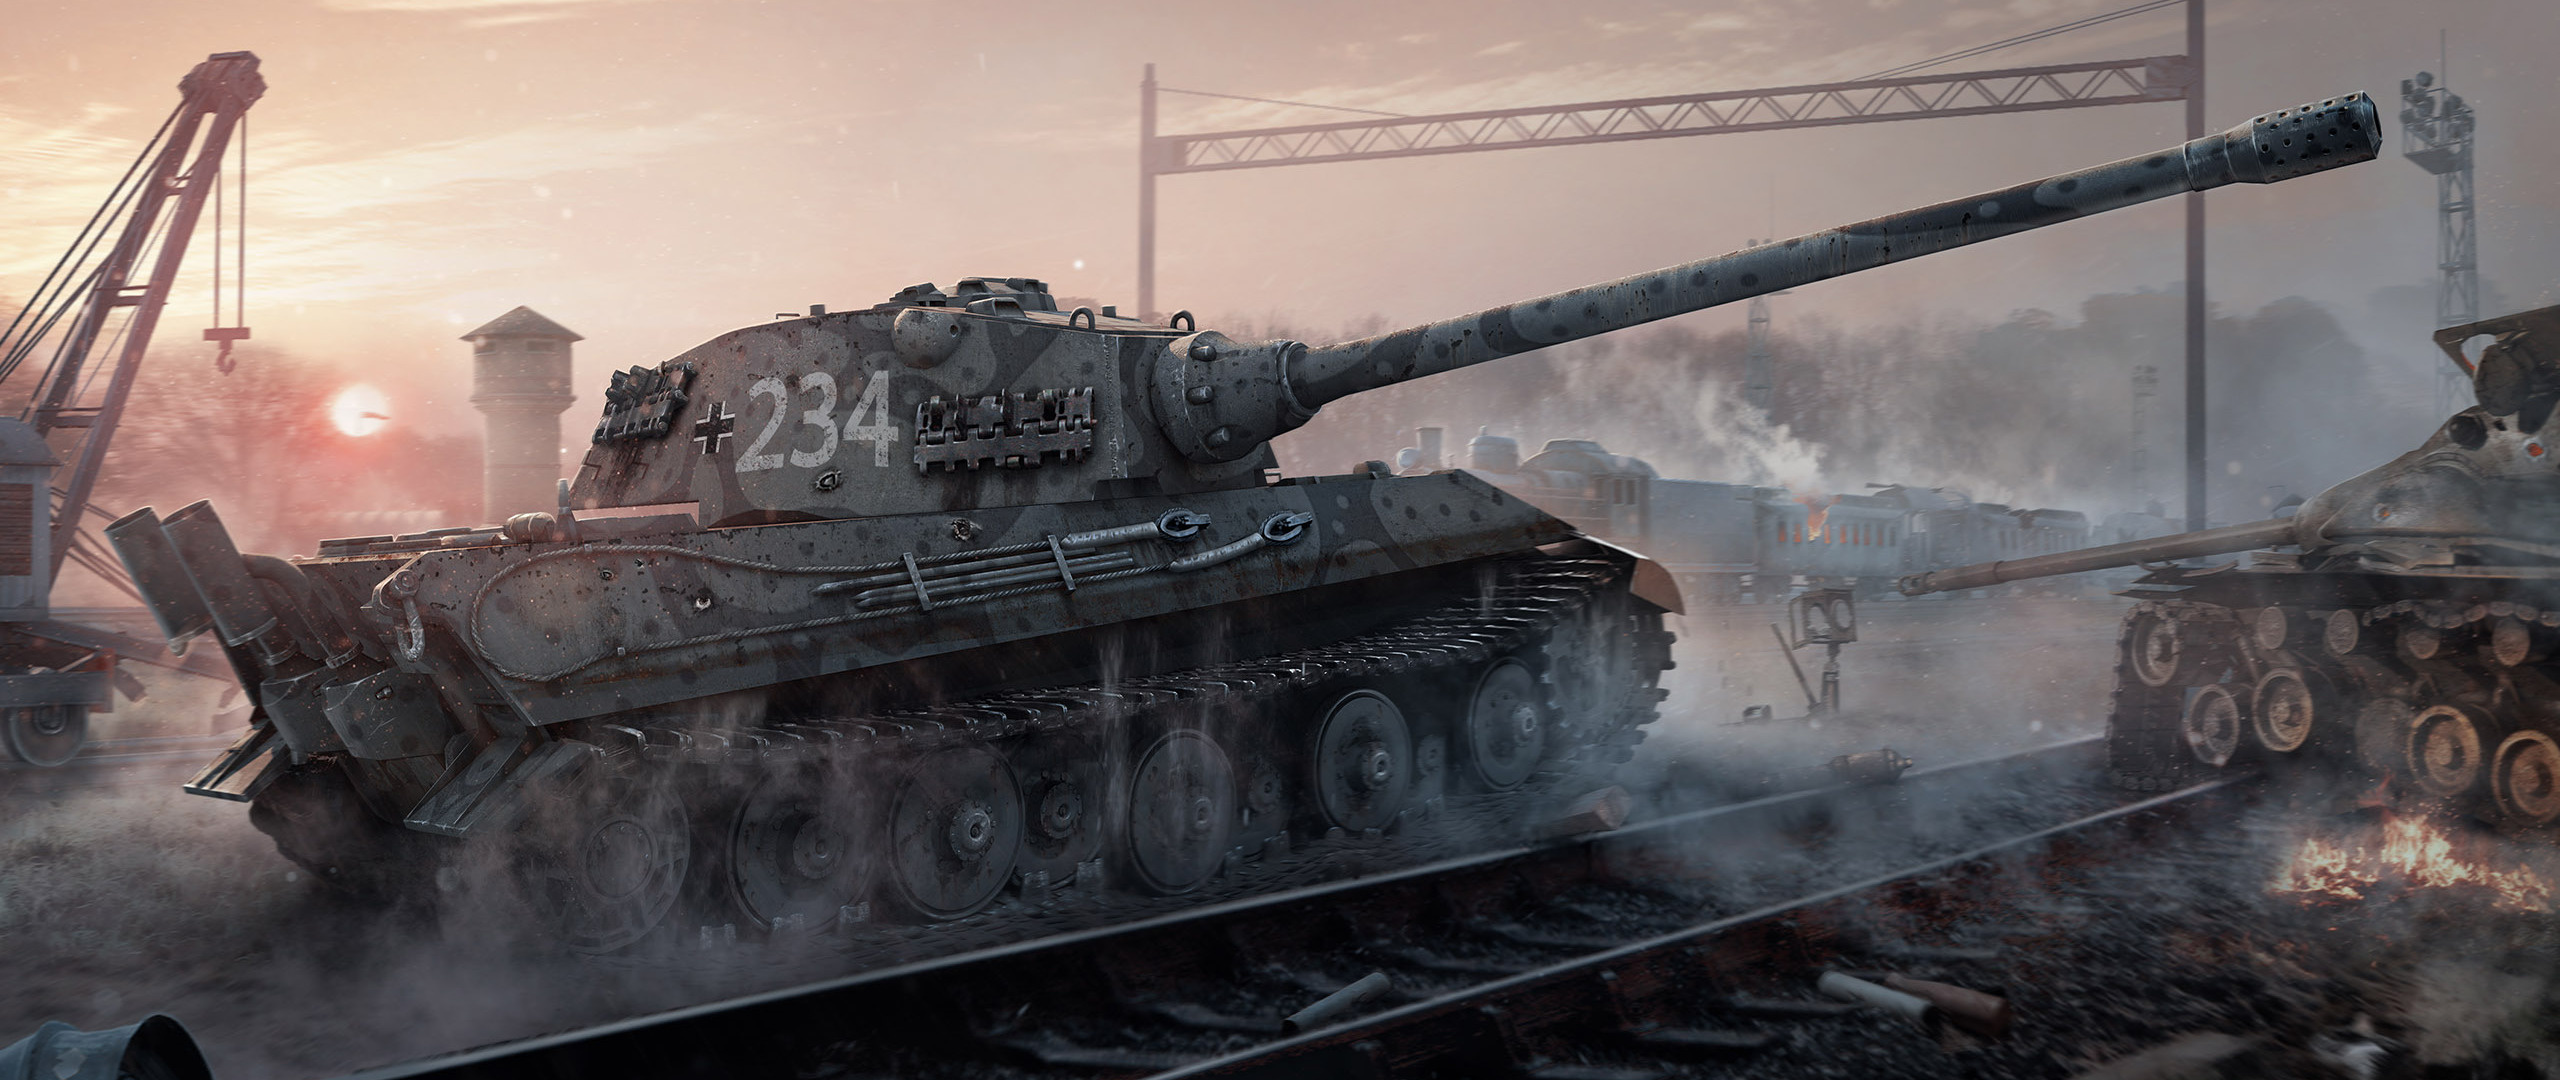 World of Tanks, E75 tank, HD 4K wallpapers, Stunning backgrounds, 2560x1080 Dual Screen Desktop